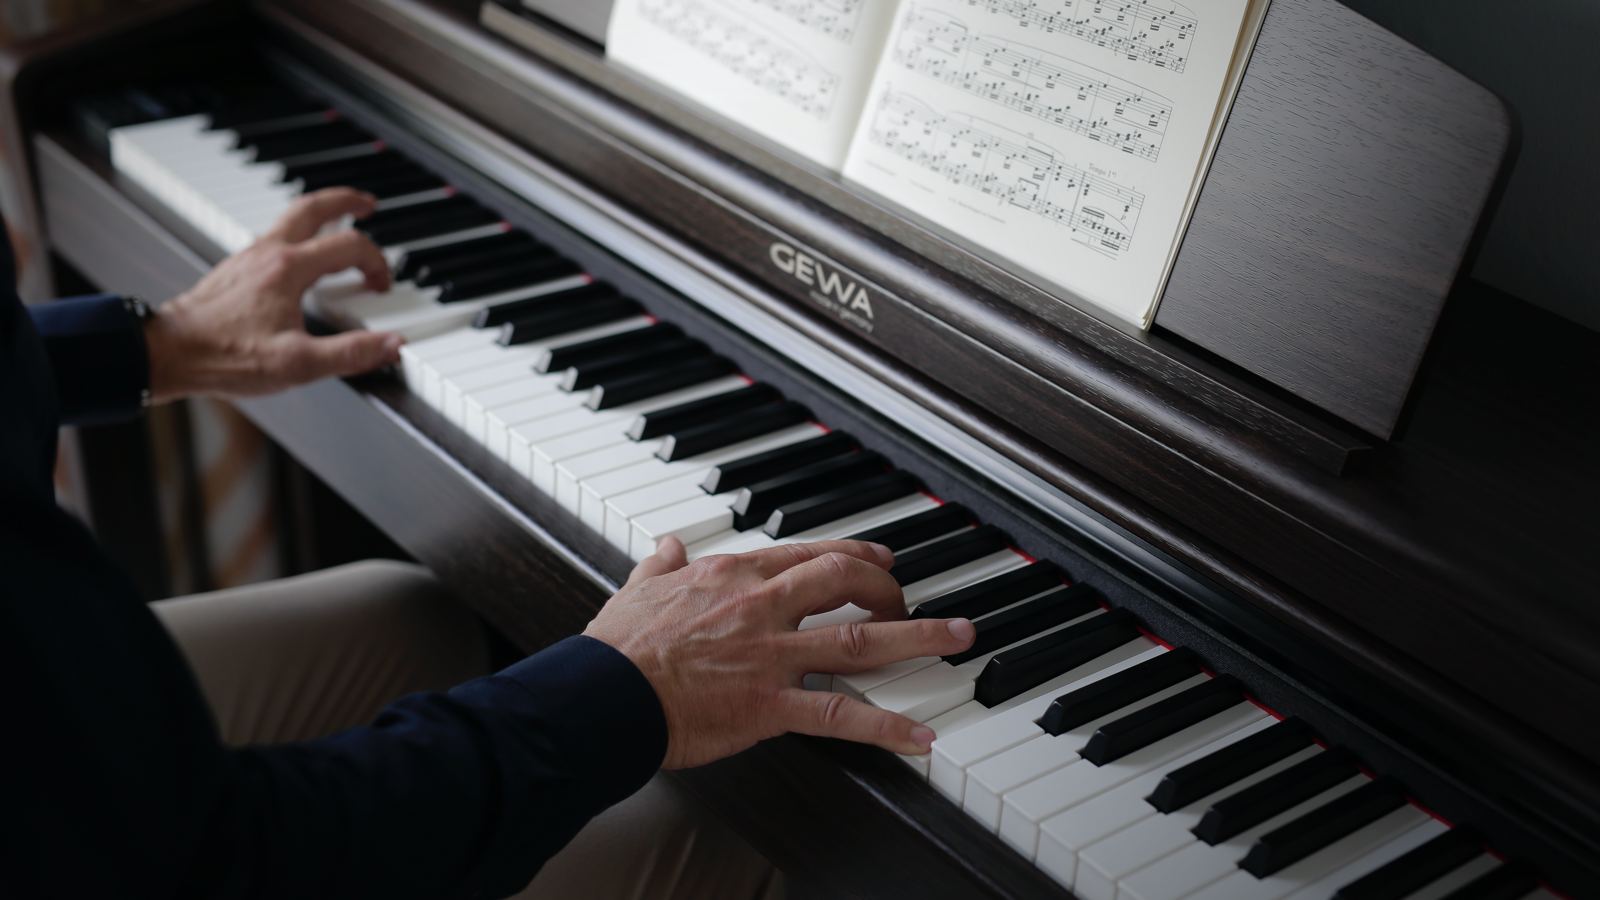 Gewa Piano-Serie - Homepianos made in Germany